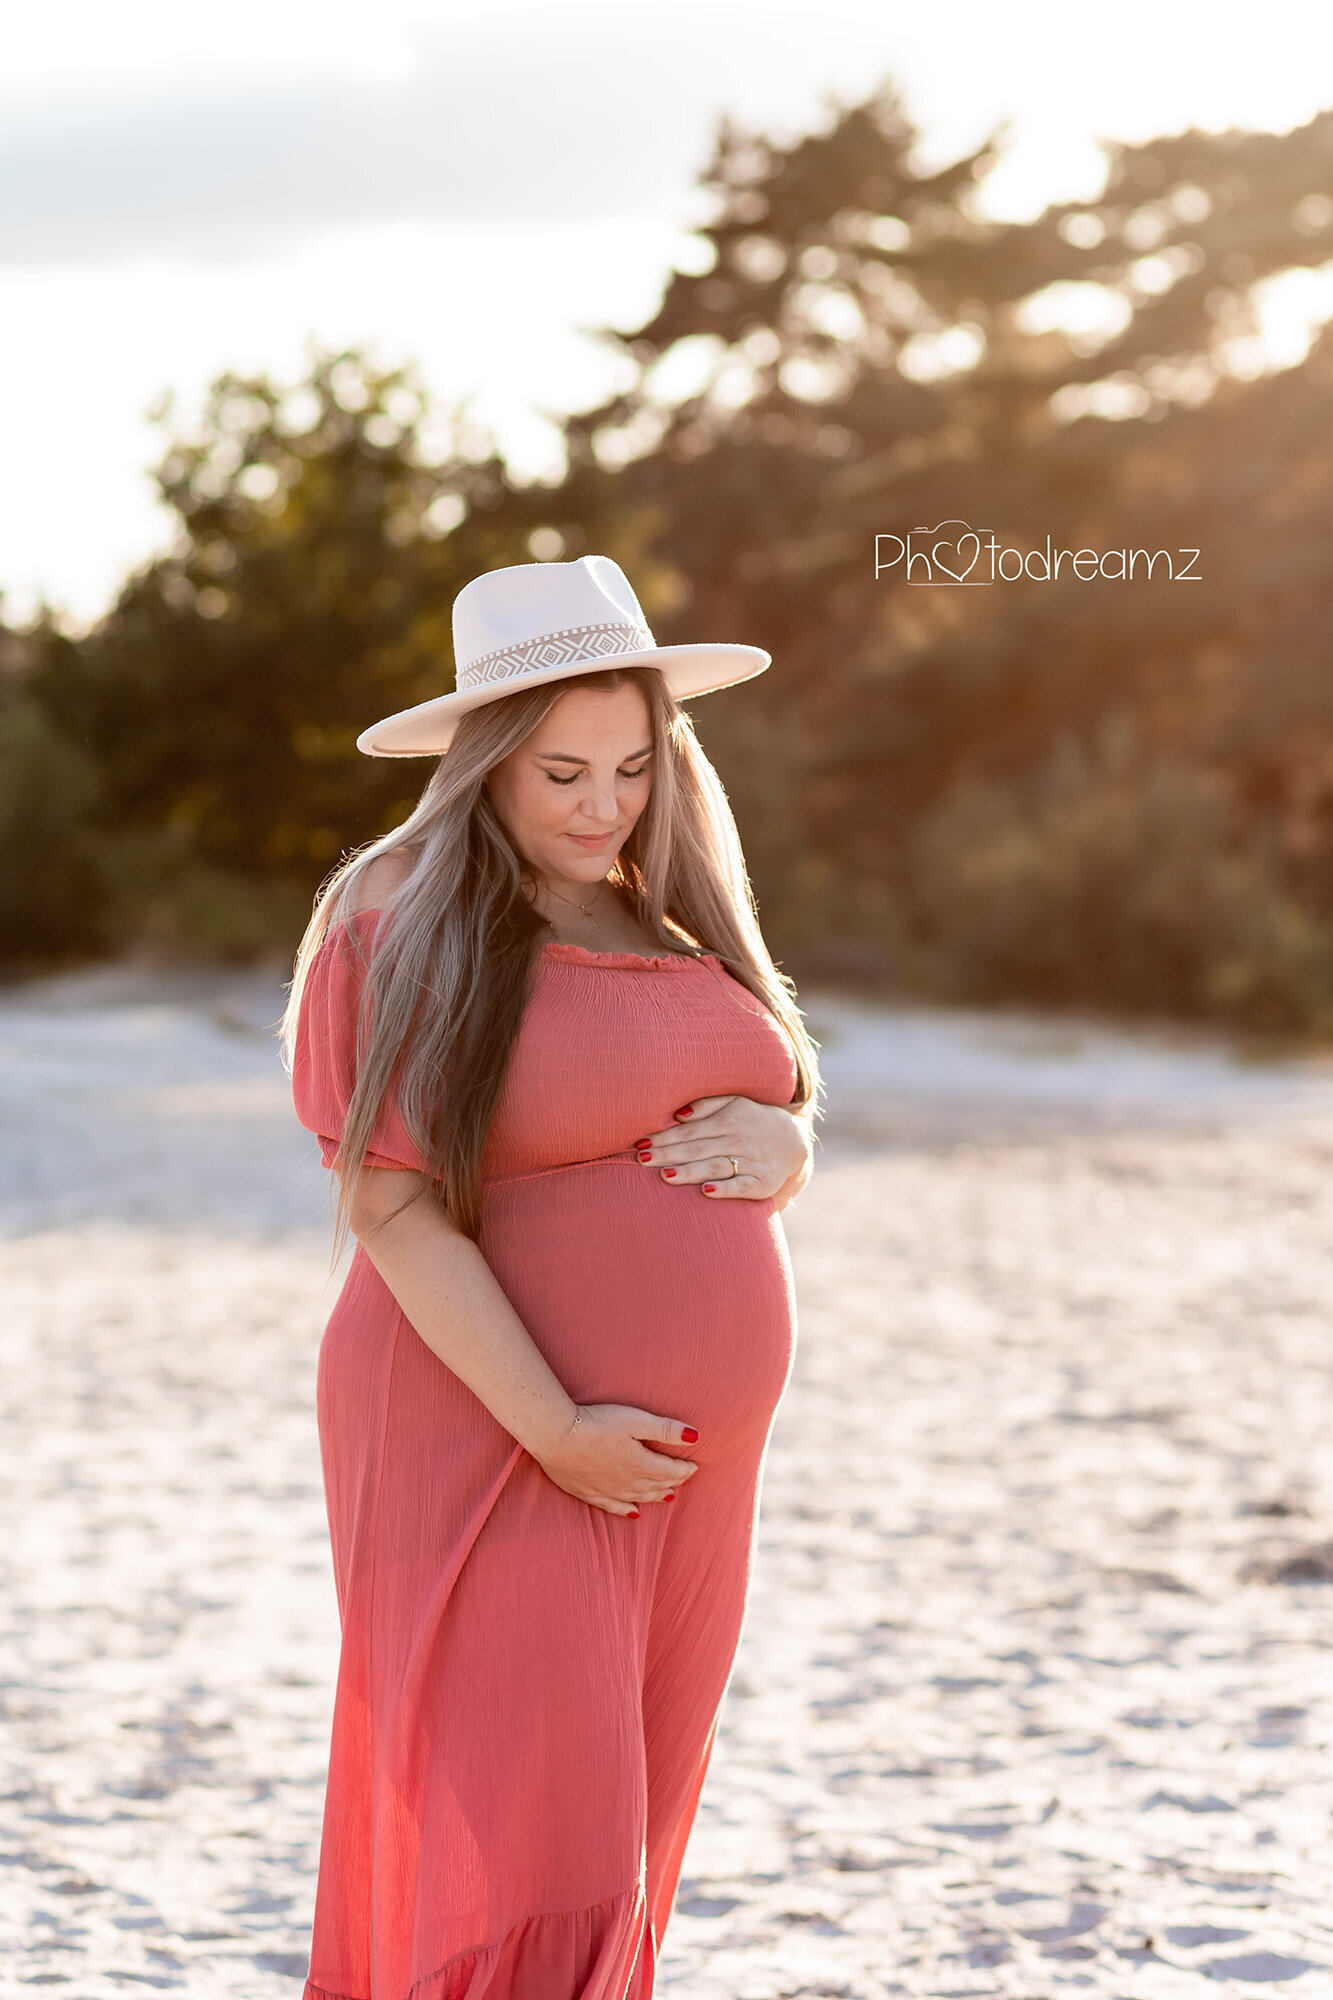 Photodreamz-zwangerschap-fotoshoot-5